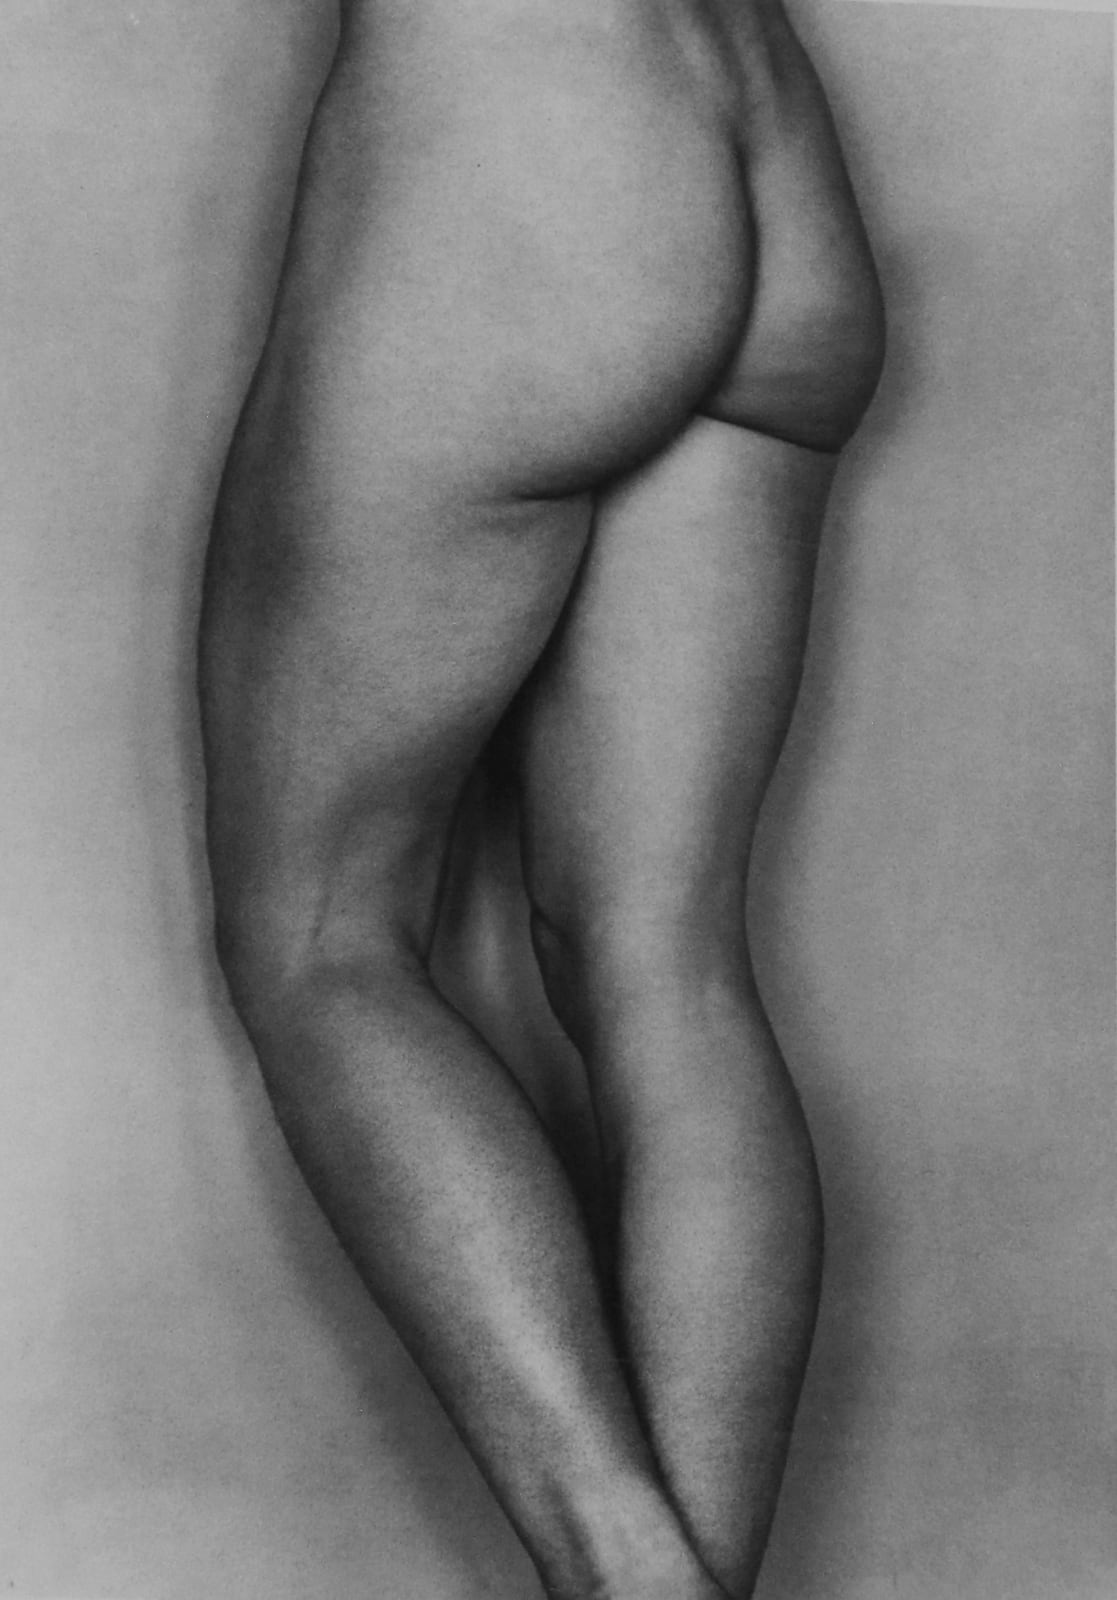 Edward Weston, Nude Publicity Print NFS, 1927